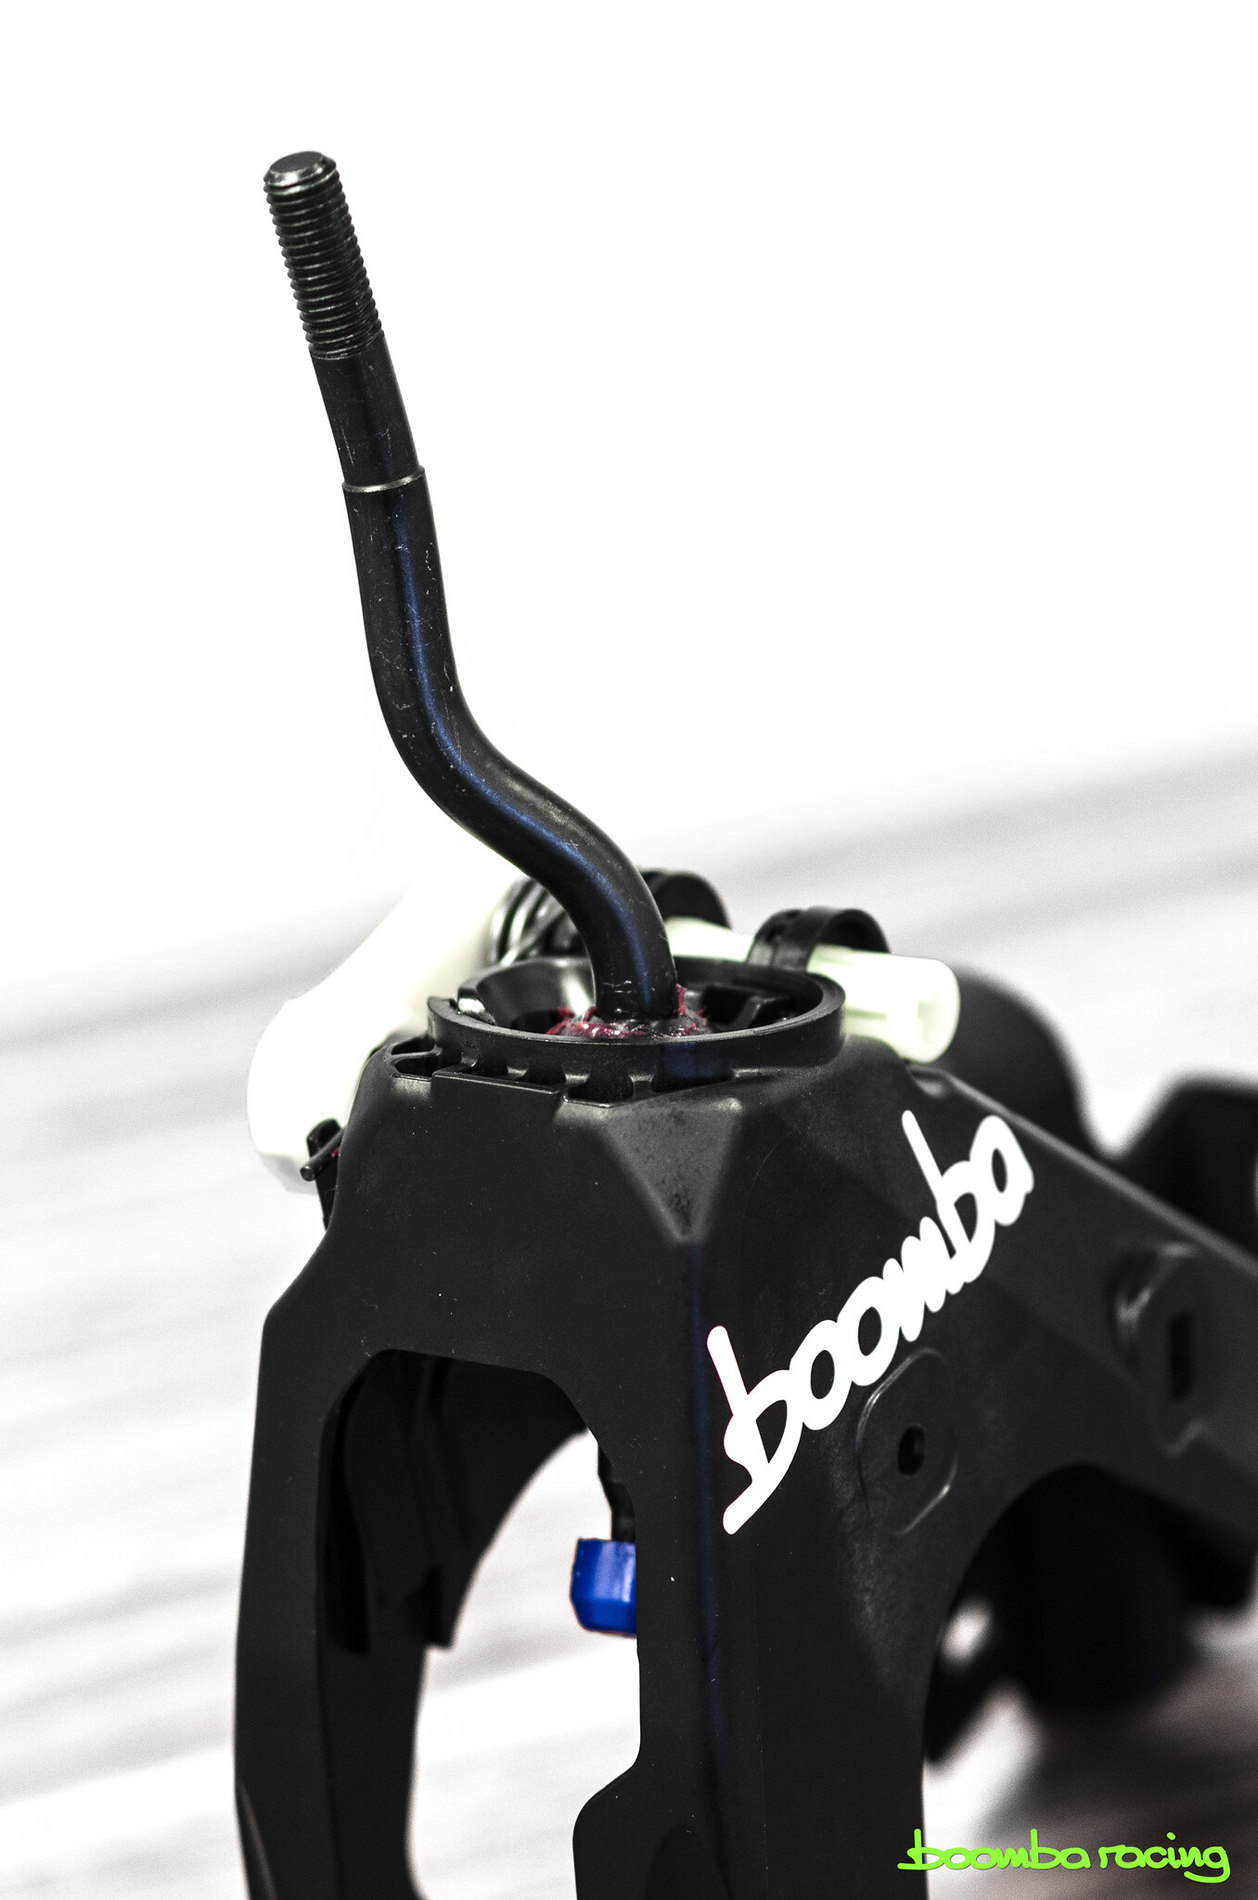 11th Gen Honda Civic Full Replacement Short Shift Assembly - Boomba Racing 47923751282_84928bda41_k